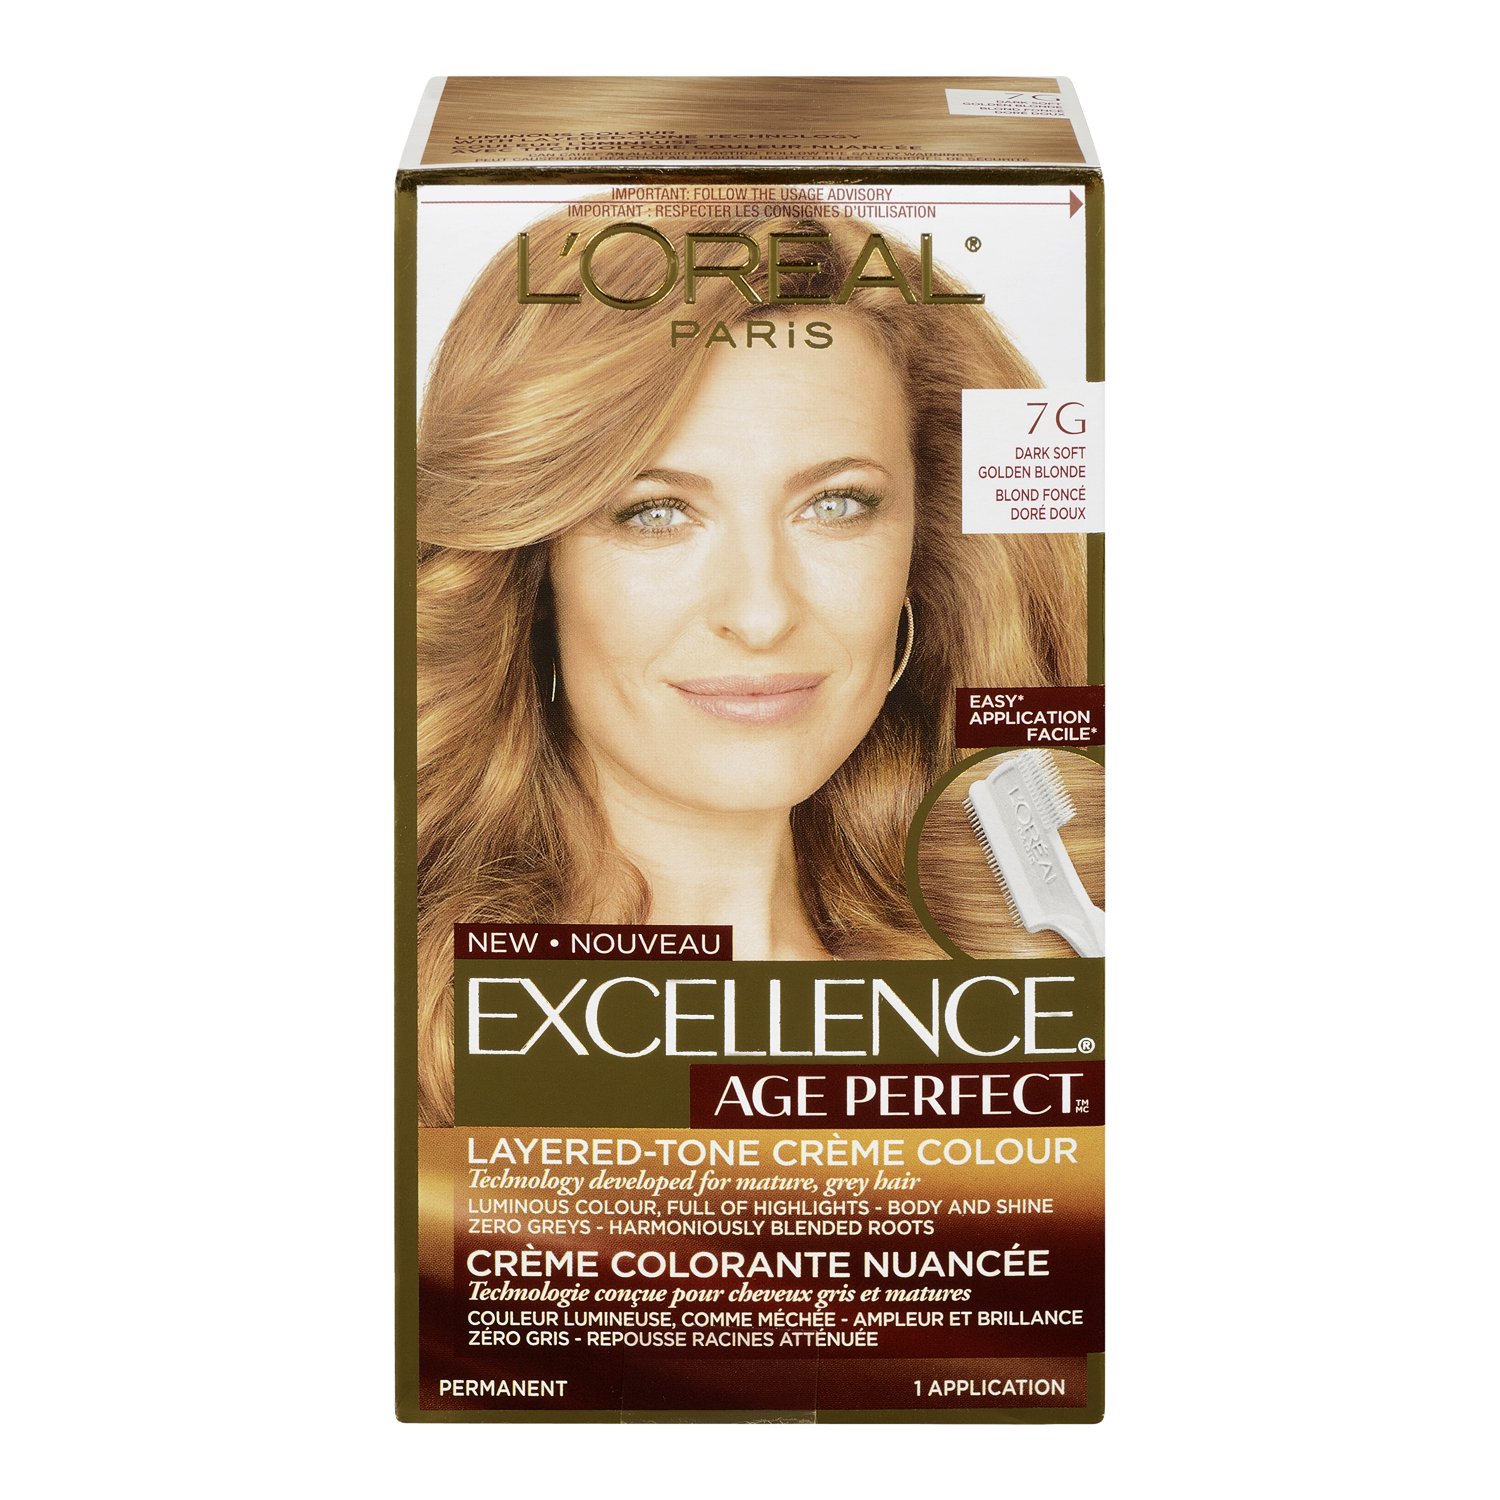 L'Oreal Paris Age Perfect Permanent Hair Color, 7G Dark Natural Golden Blonde, 1 kit